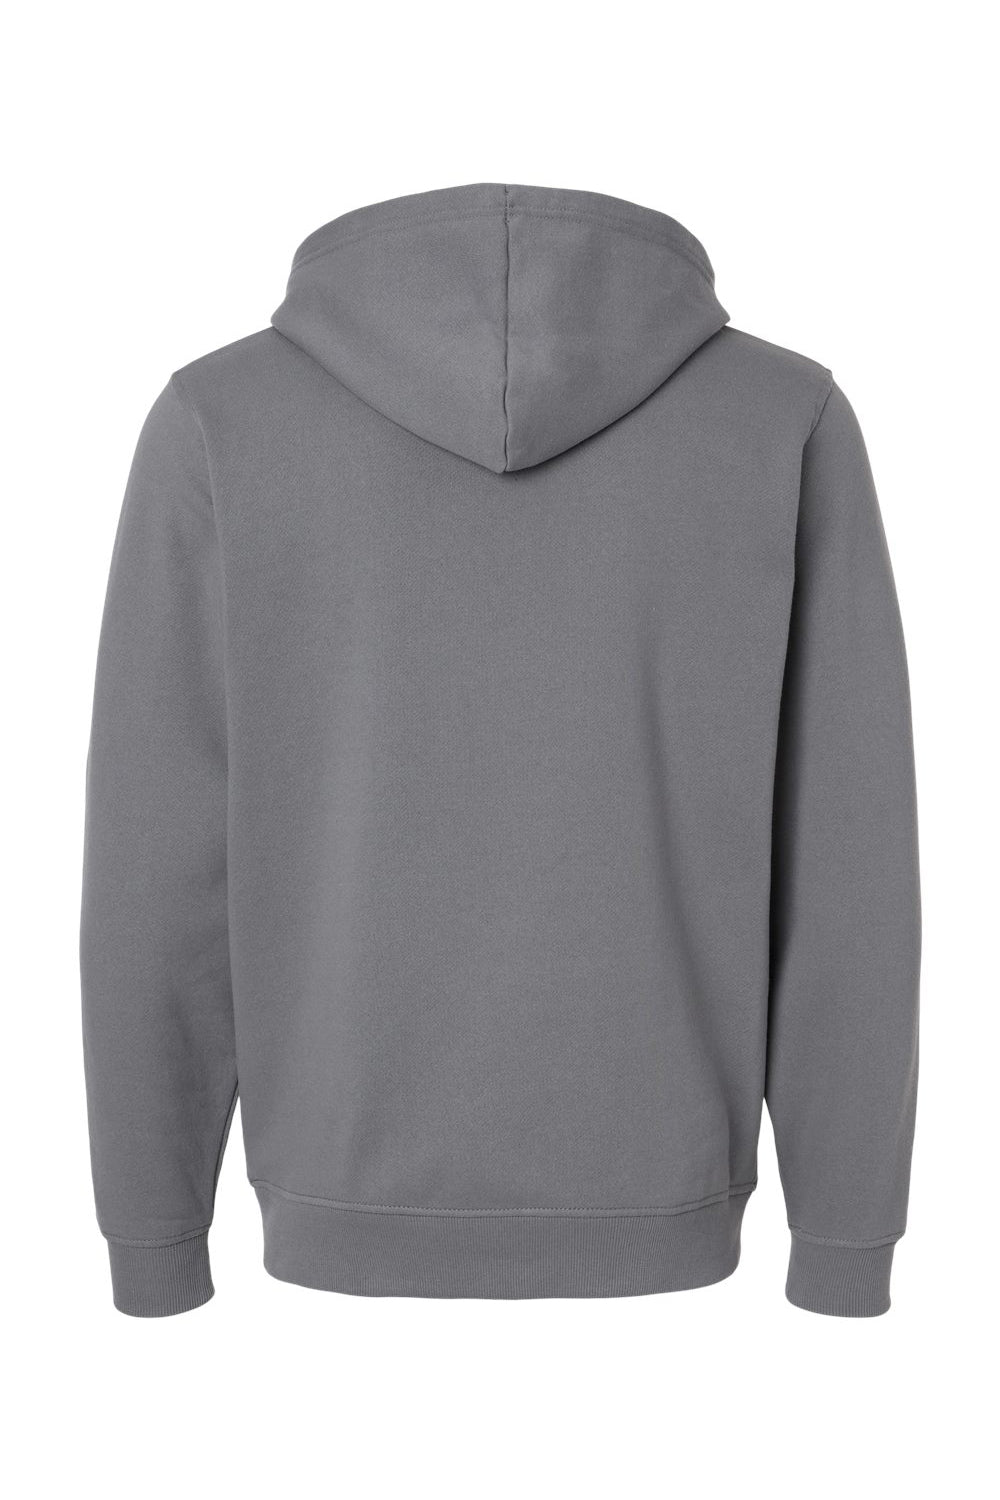 Augusta Sportswear 5414 Mens Fleece Hooded Sweatshirt Hoodie Graphite Grey Flat Back